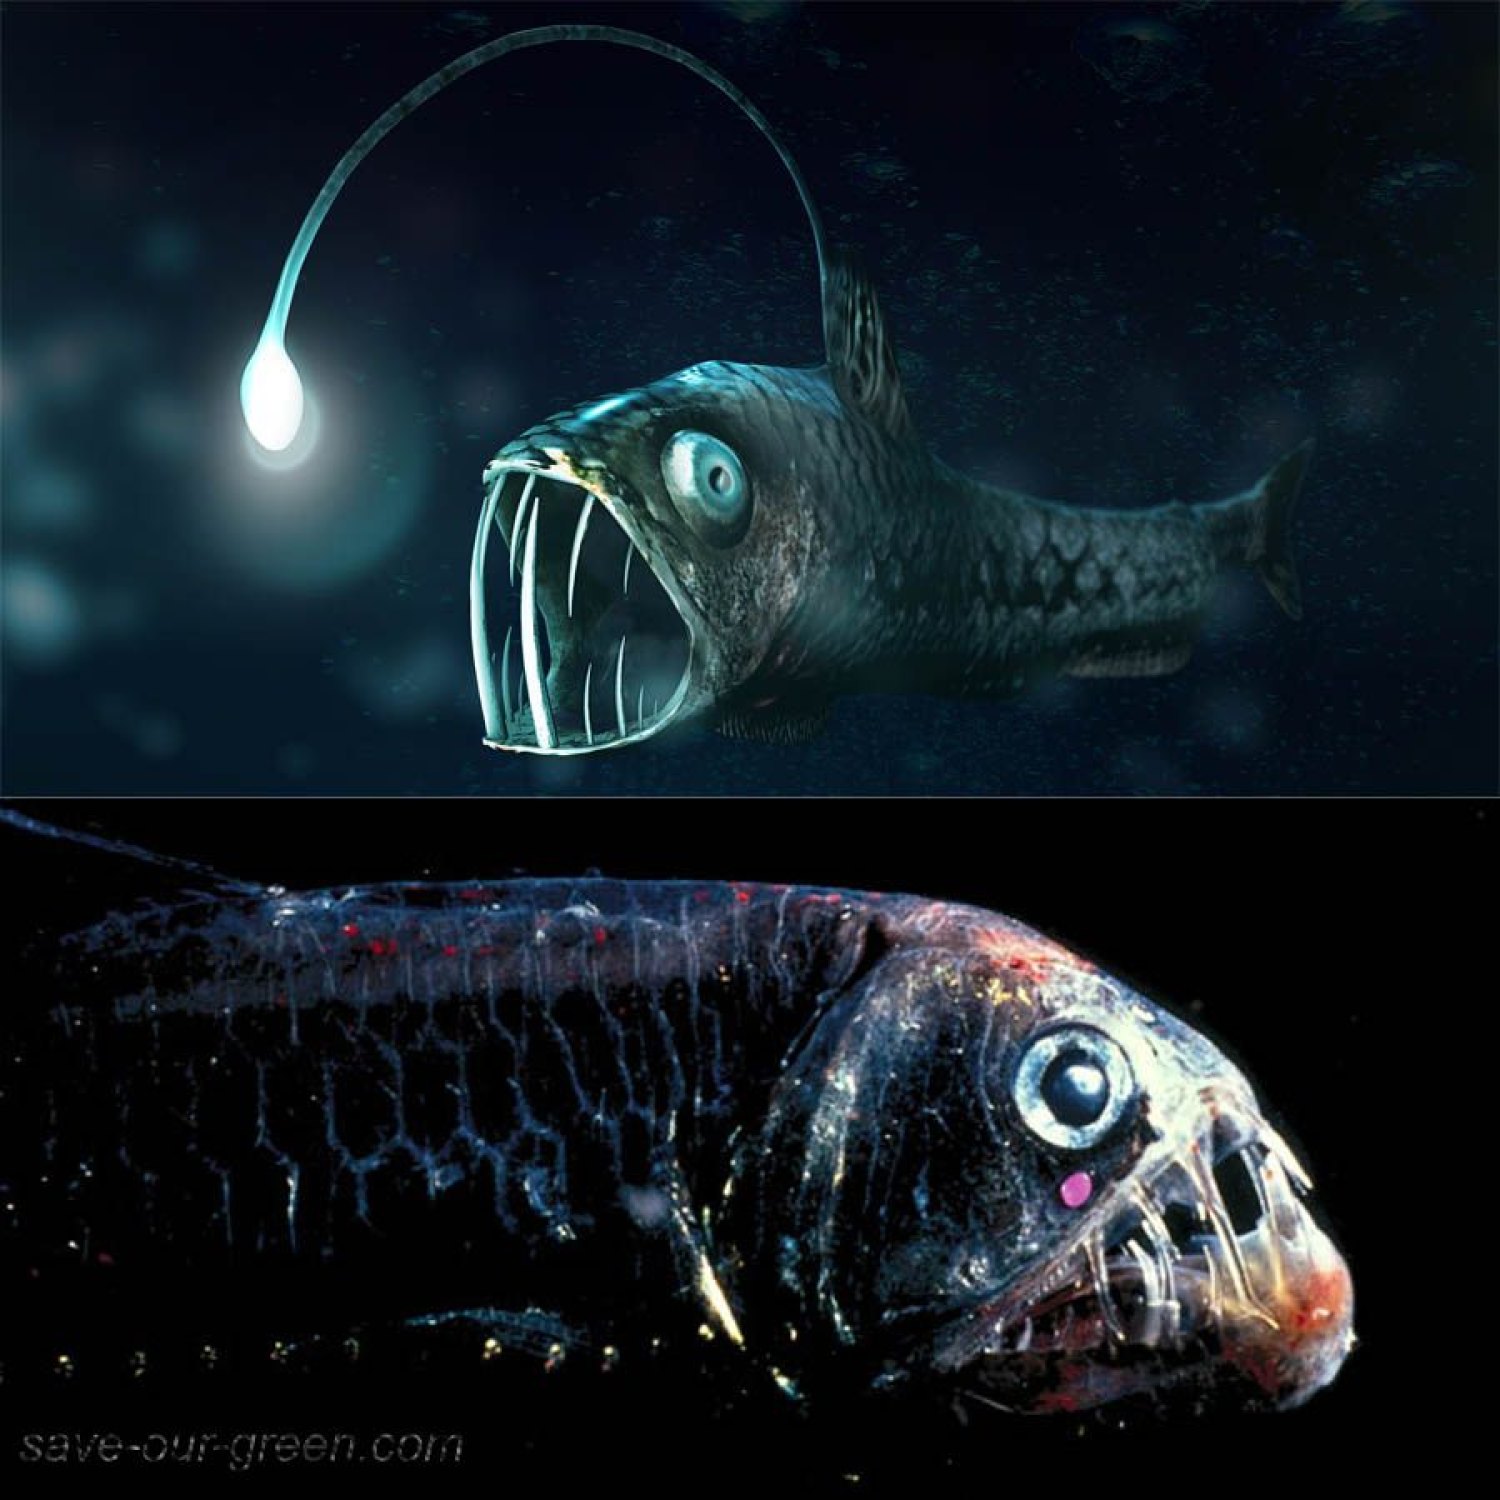 Viperfish